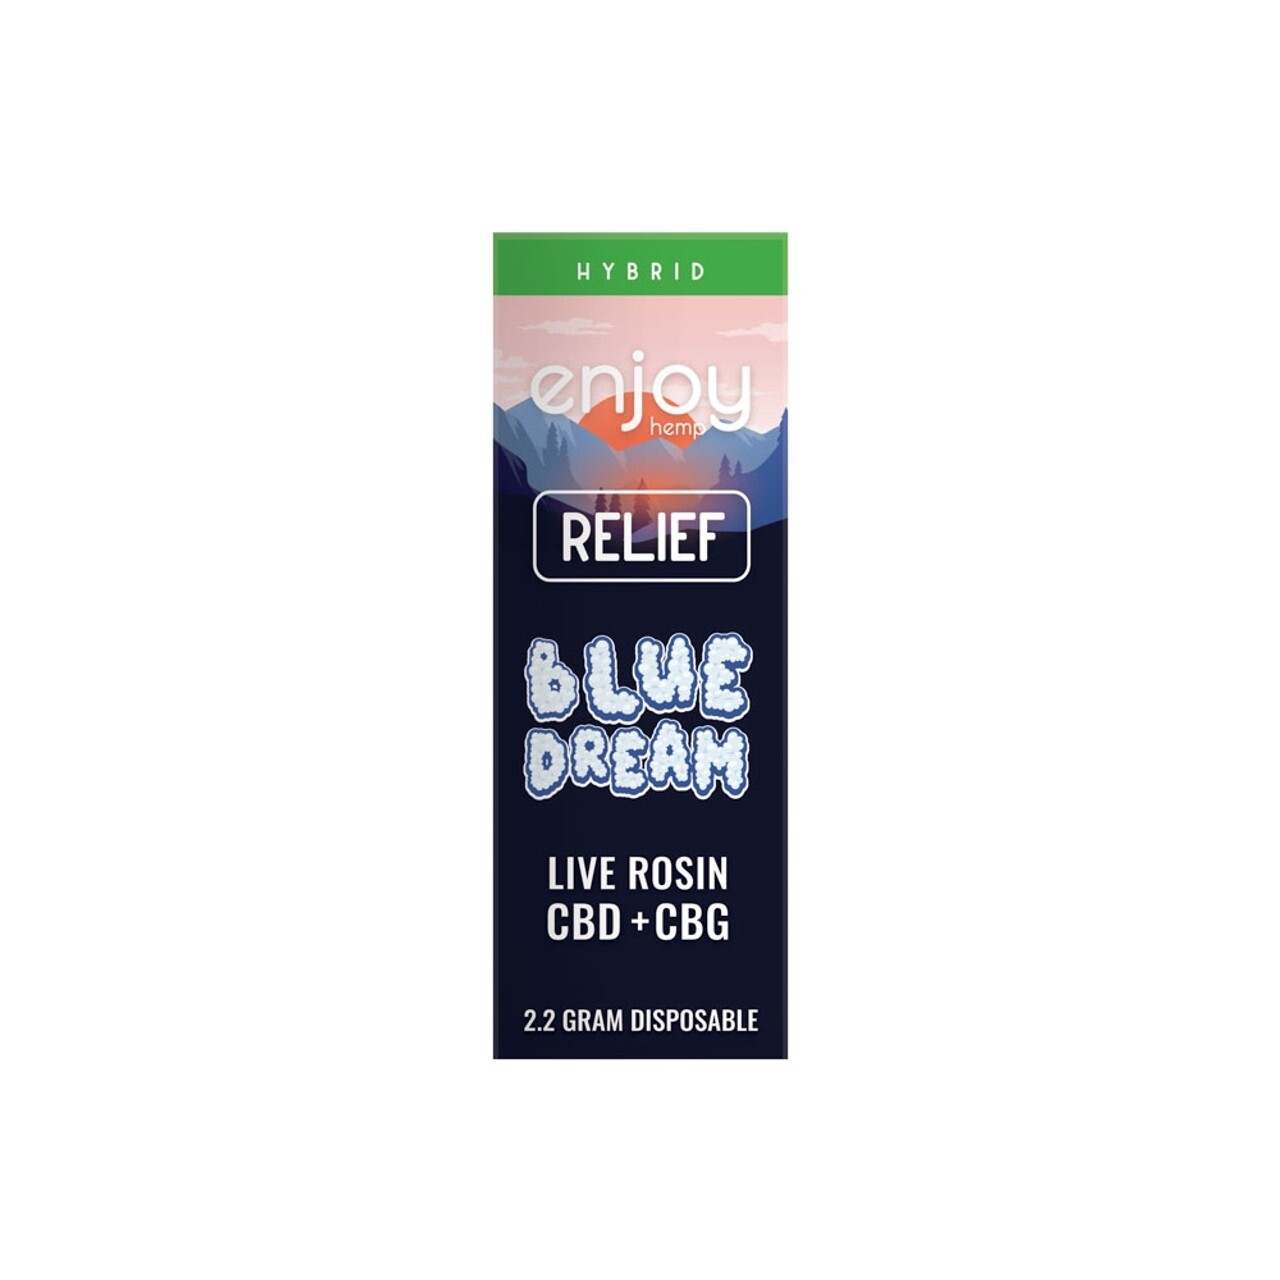 Enjoy: Live Rosin Relief CBD + CBG 2.2g Disposable Vape- Blue Dream